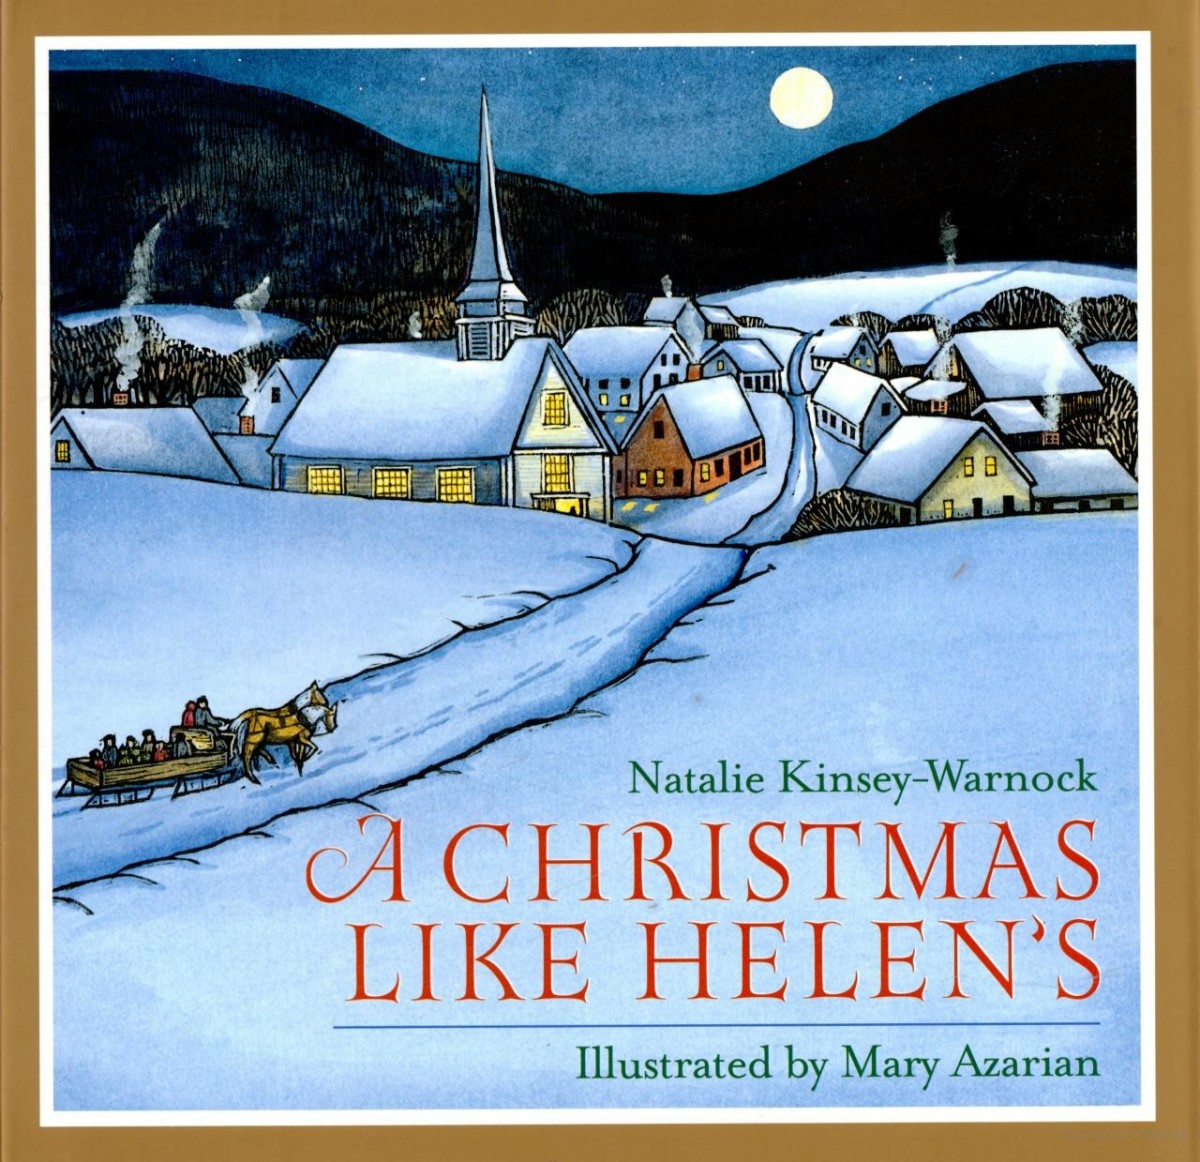 A Christmas Like Helen's, by Natalie Kinsey-Warnock and Mary Azarian